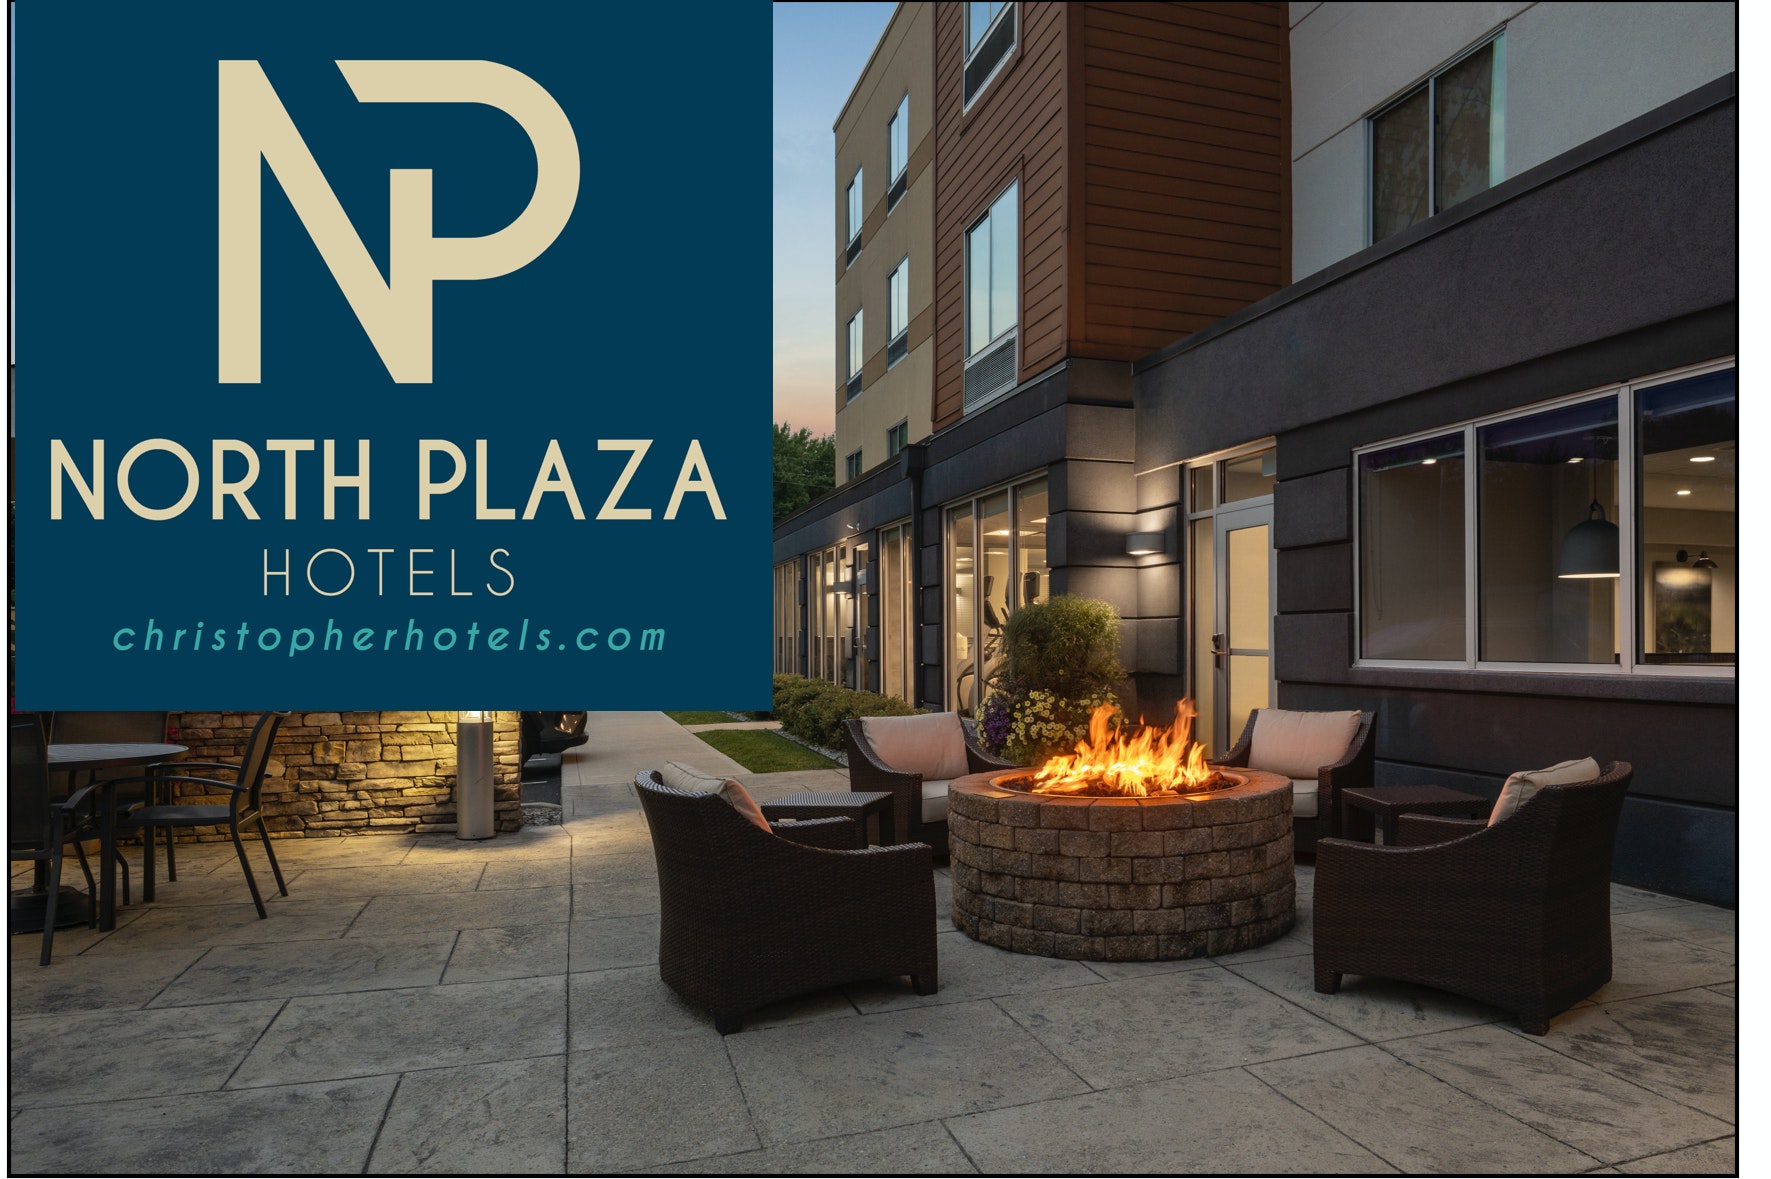 North Plaza Hotels